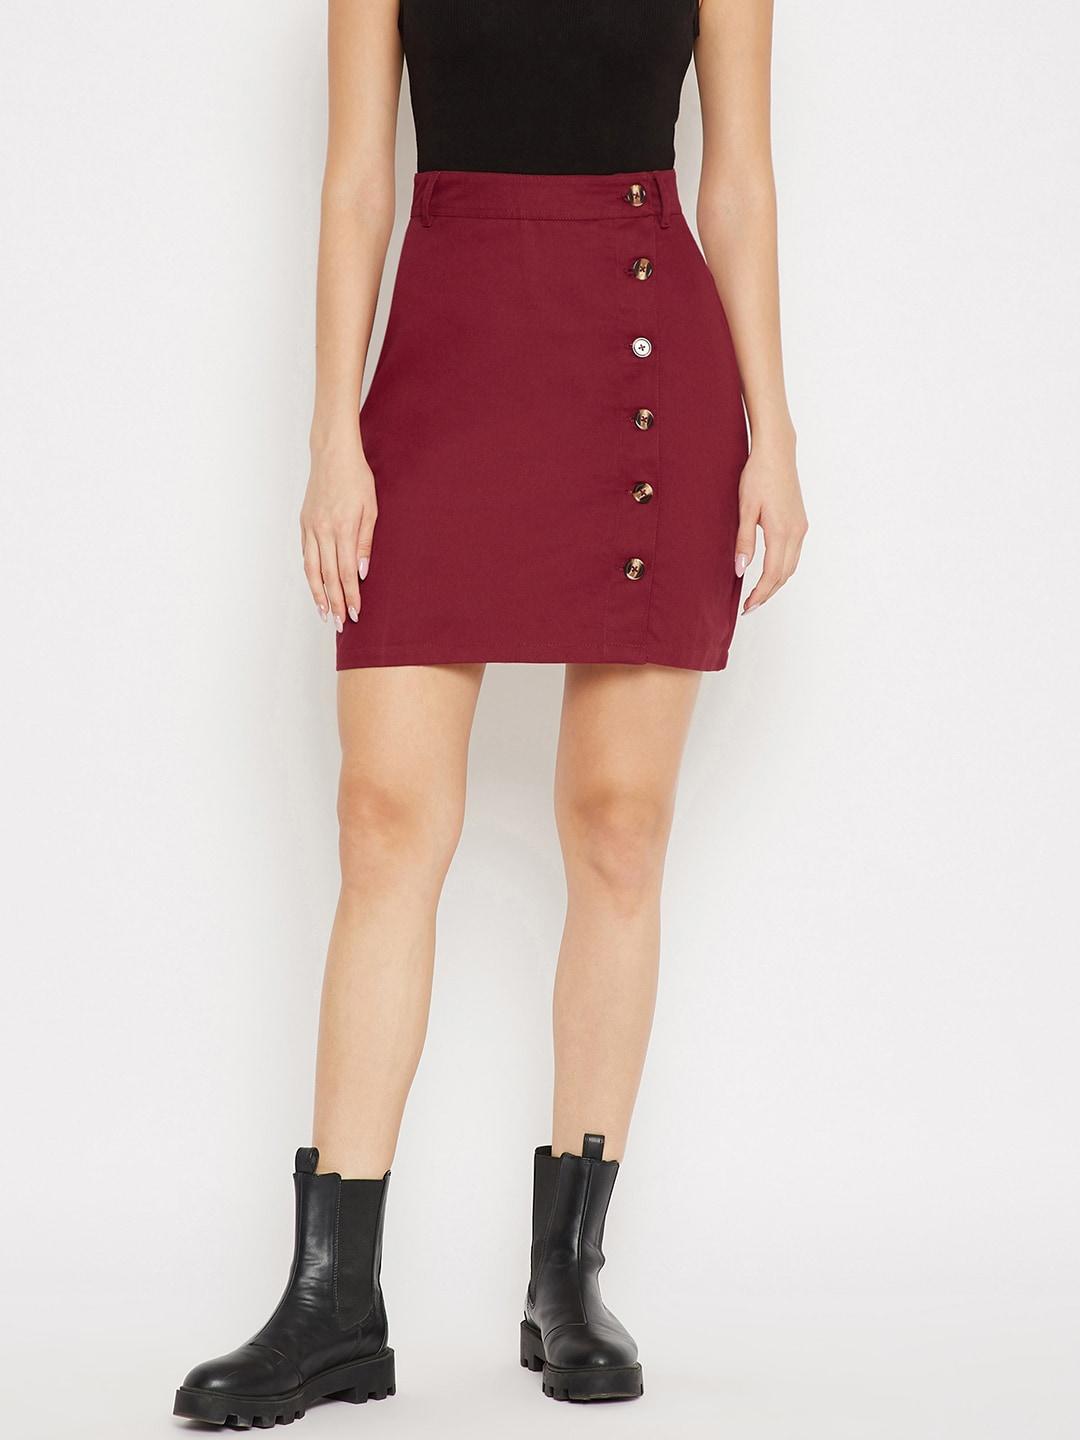 uptownie-lite-women-maroon-stretchable-denim-knee-length-skirt